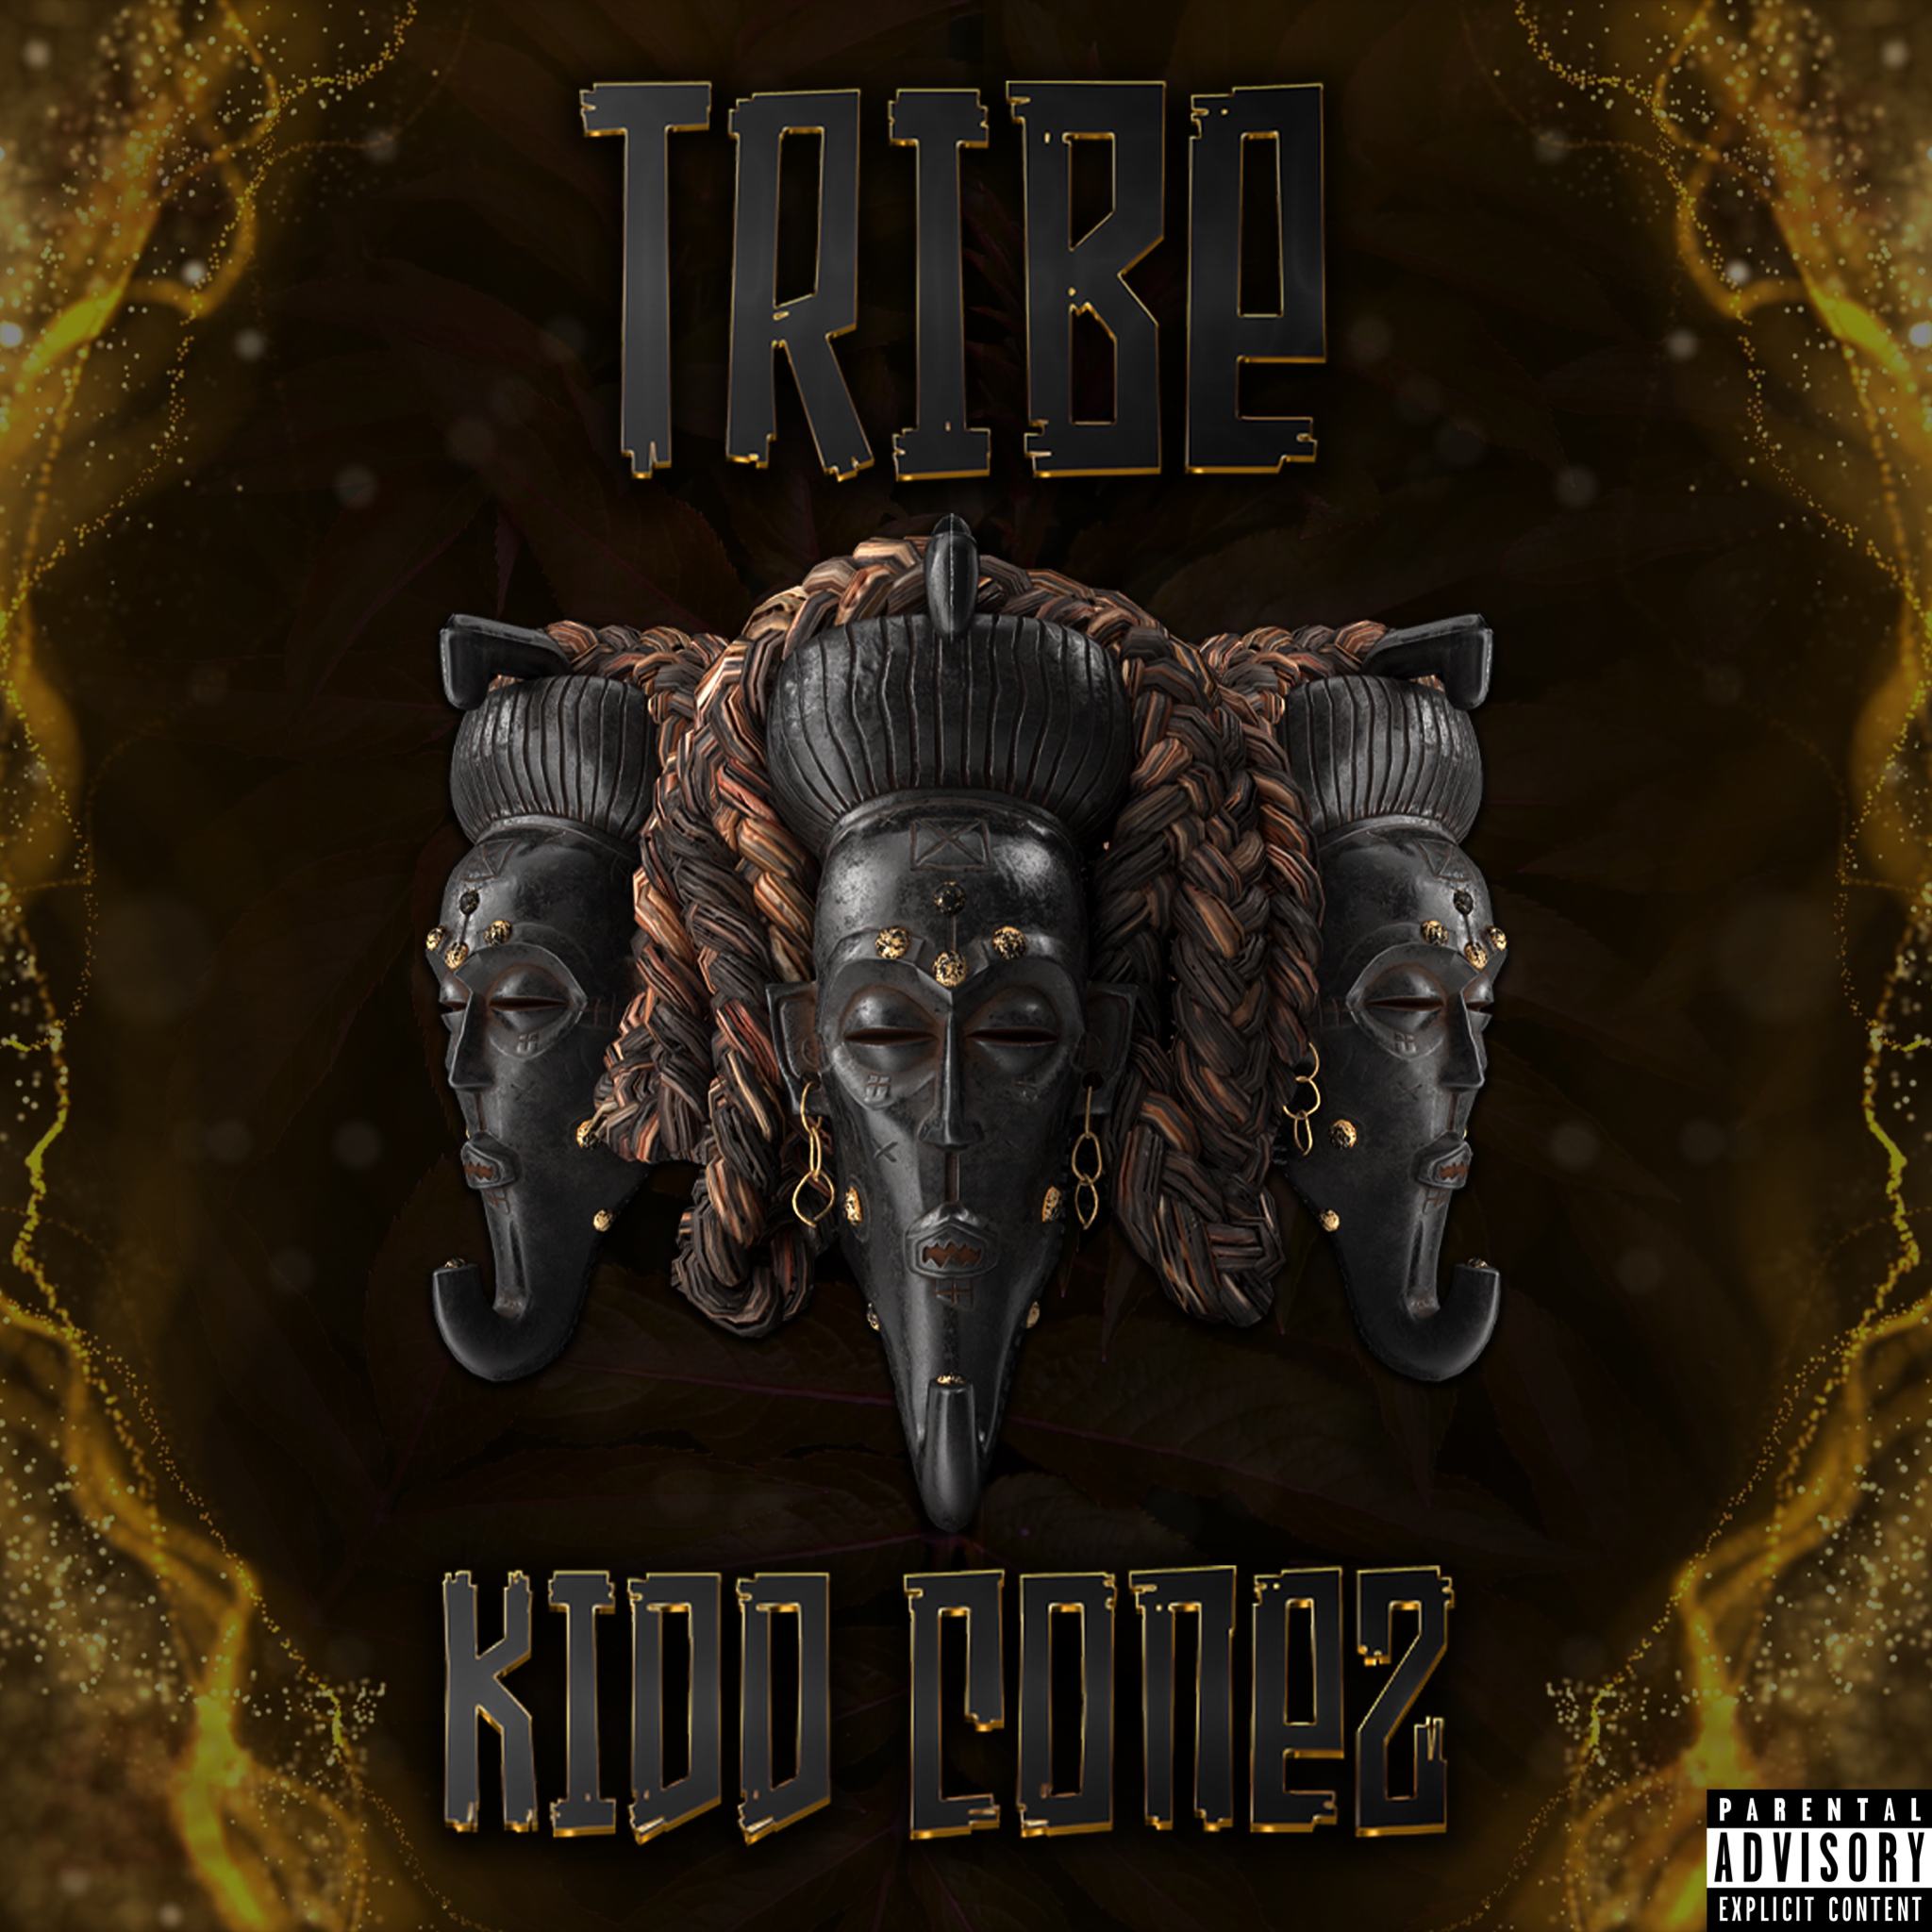 Tribe - Kidd Conez